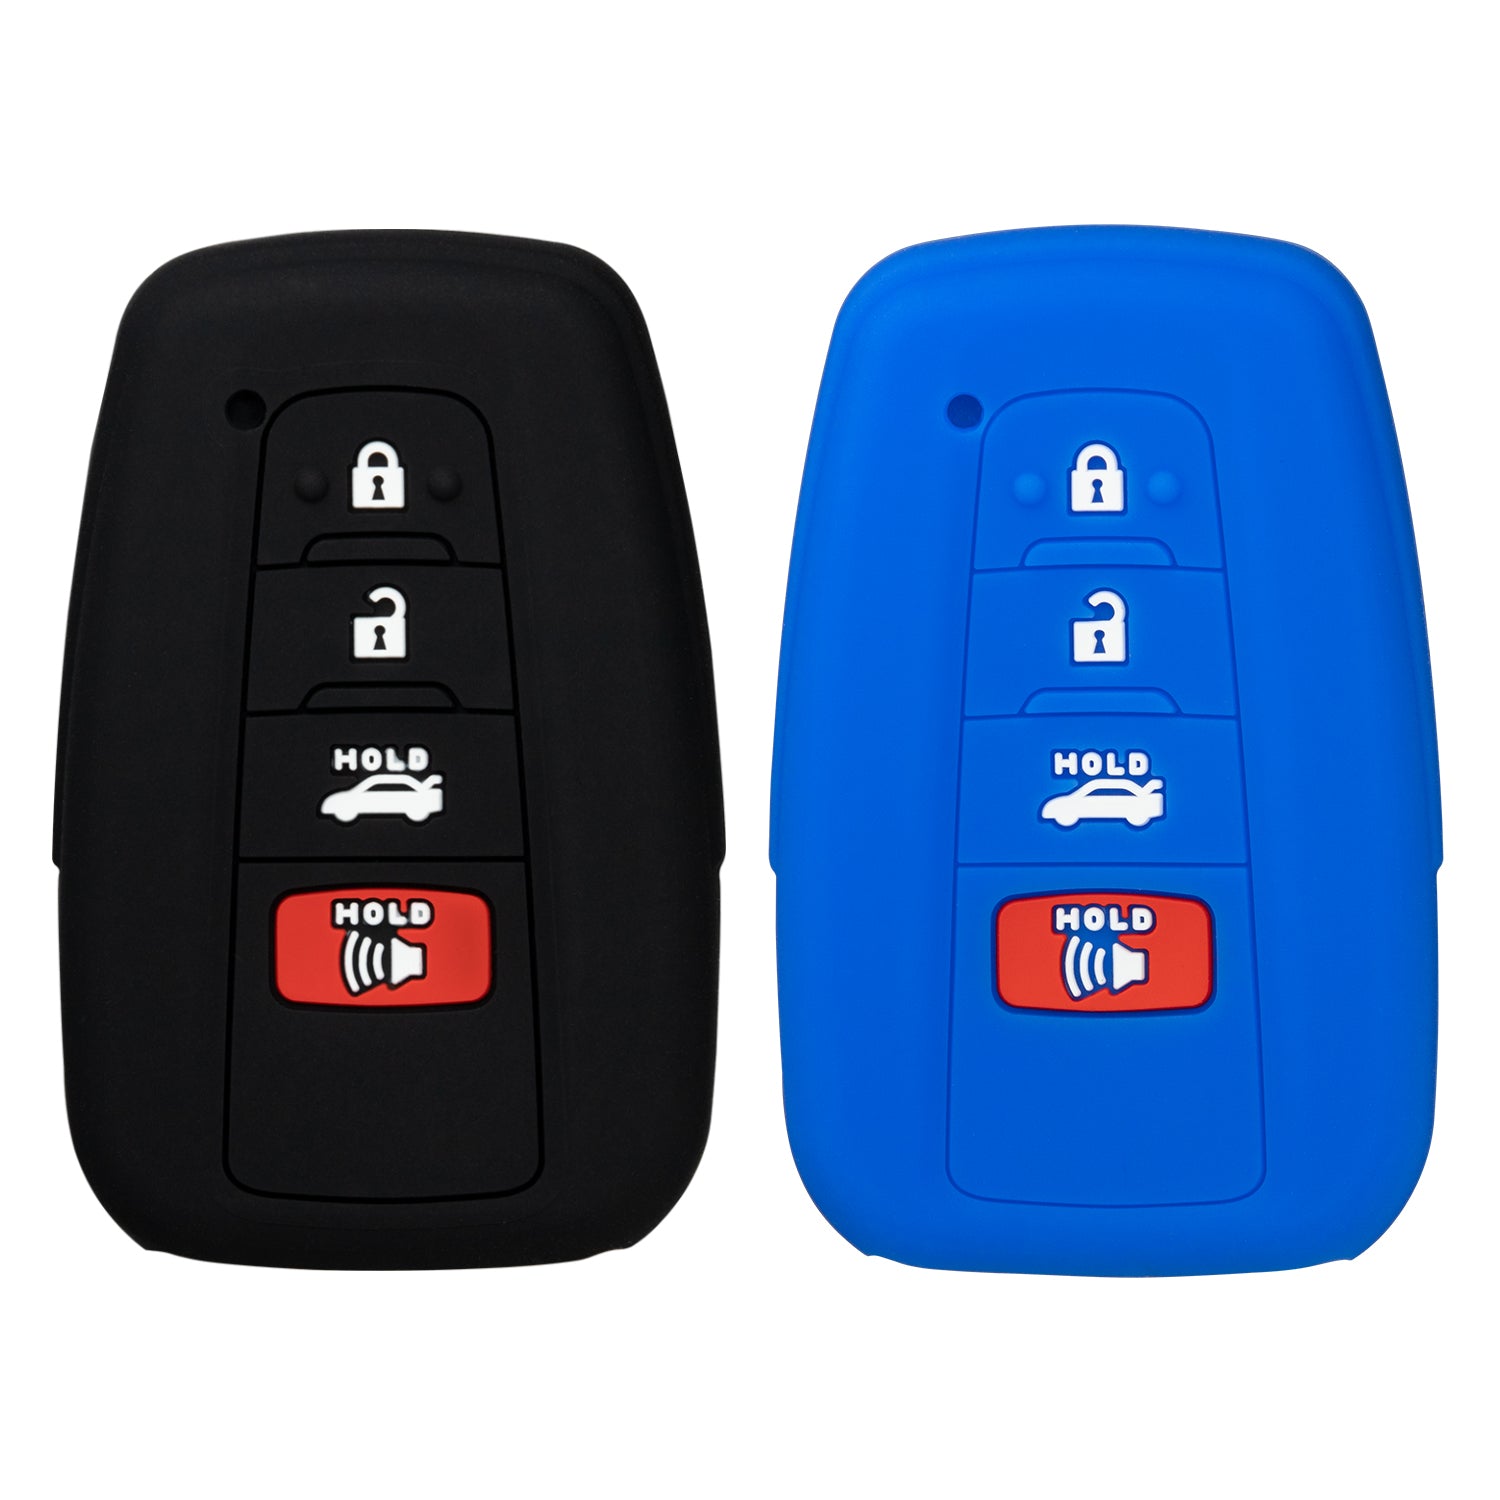 Silicone Case 4 Button Shell for Toyota Smart Proximity Remote Key HYQ14FBE, HYQ14FBC, HYQ14AHP, HYQ14FBN (Black & Blue)